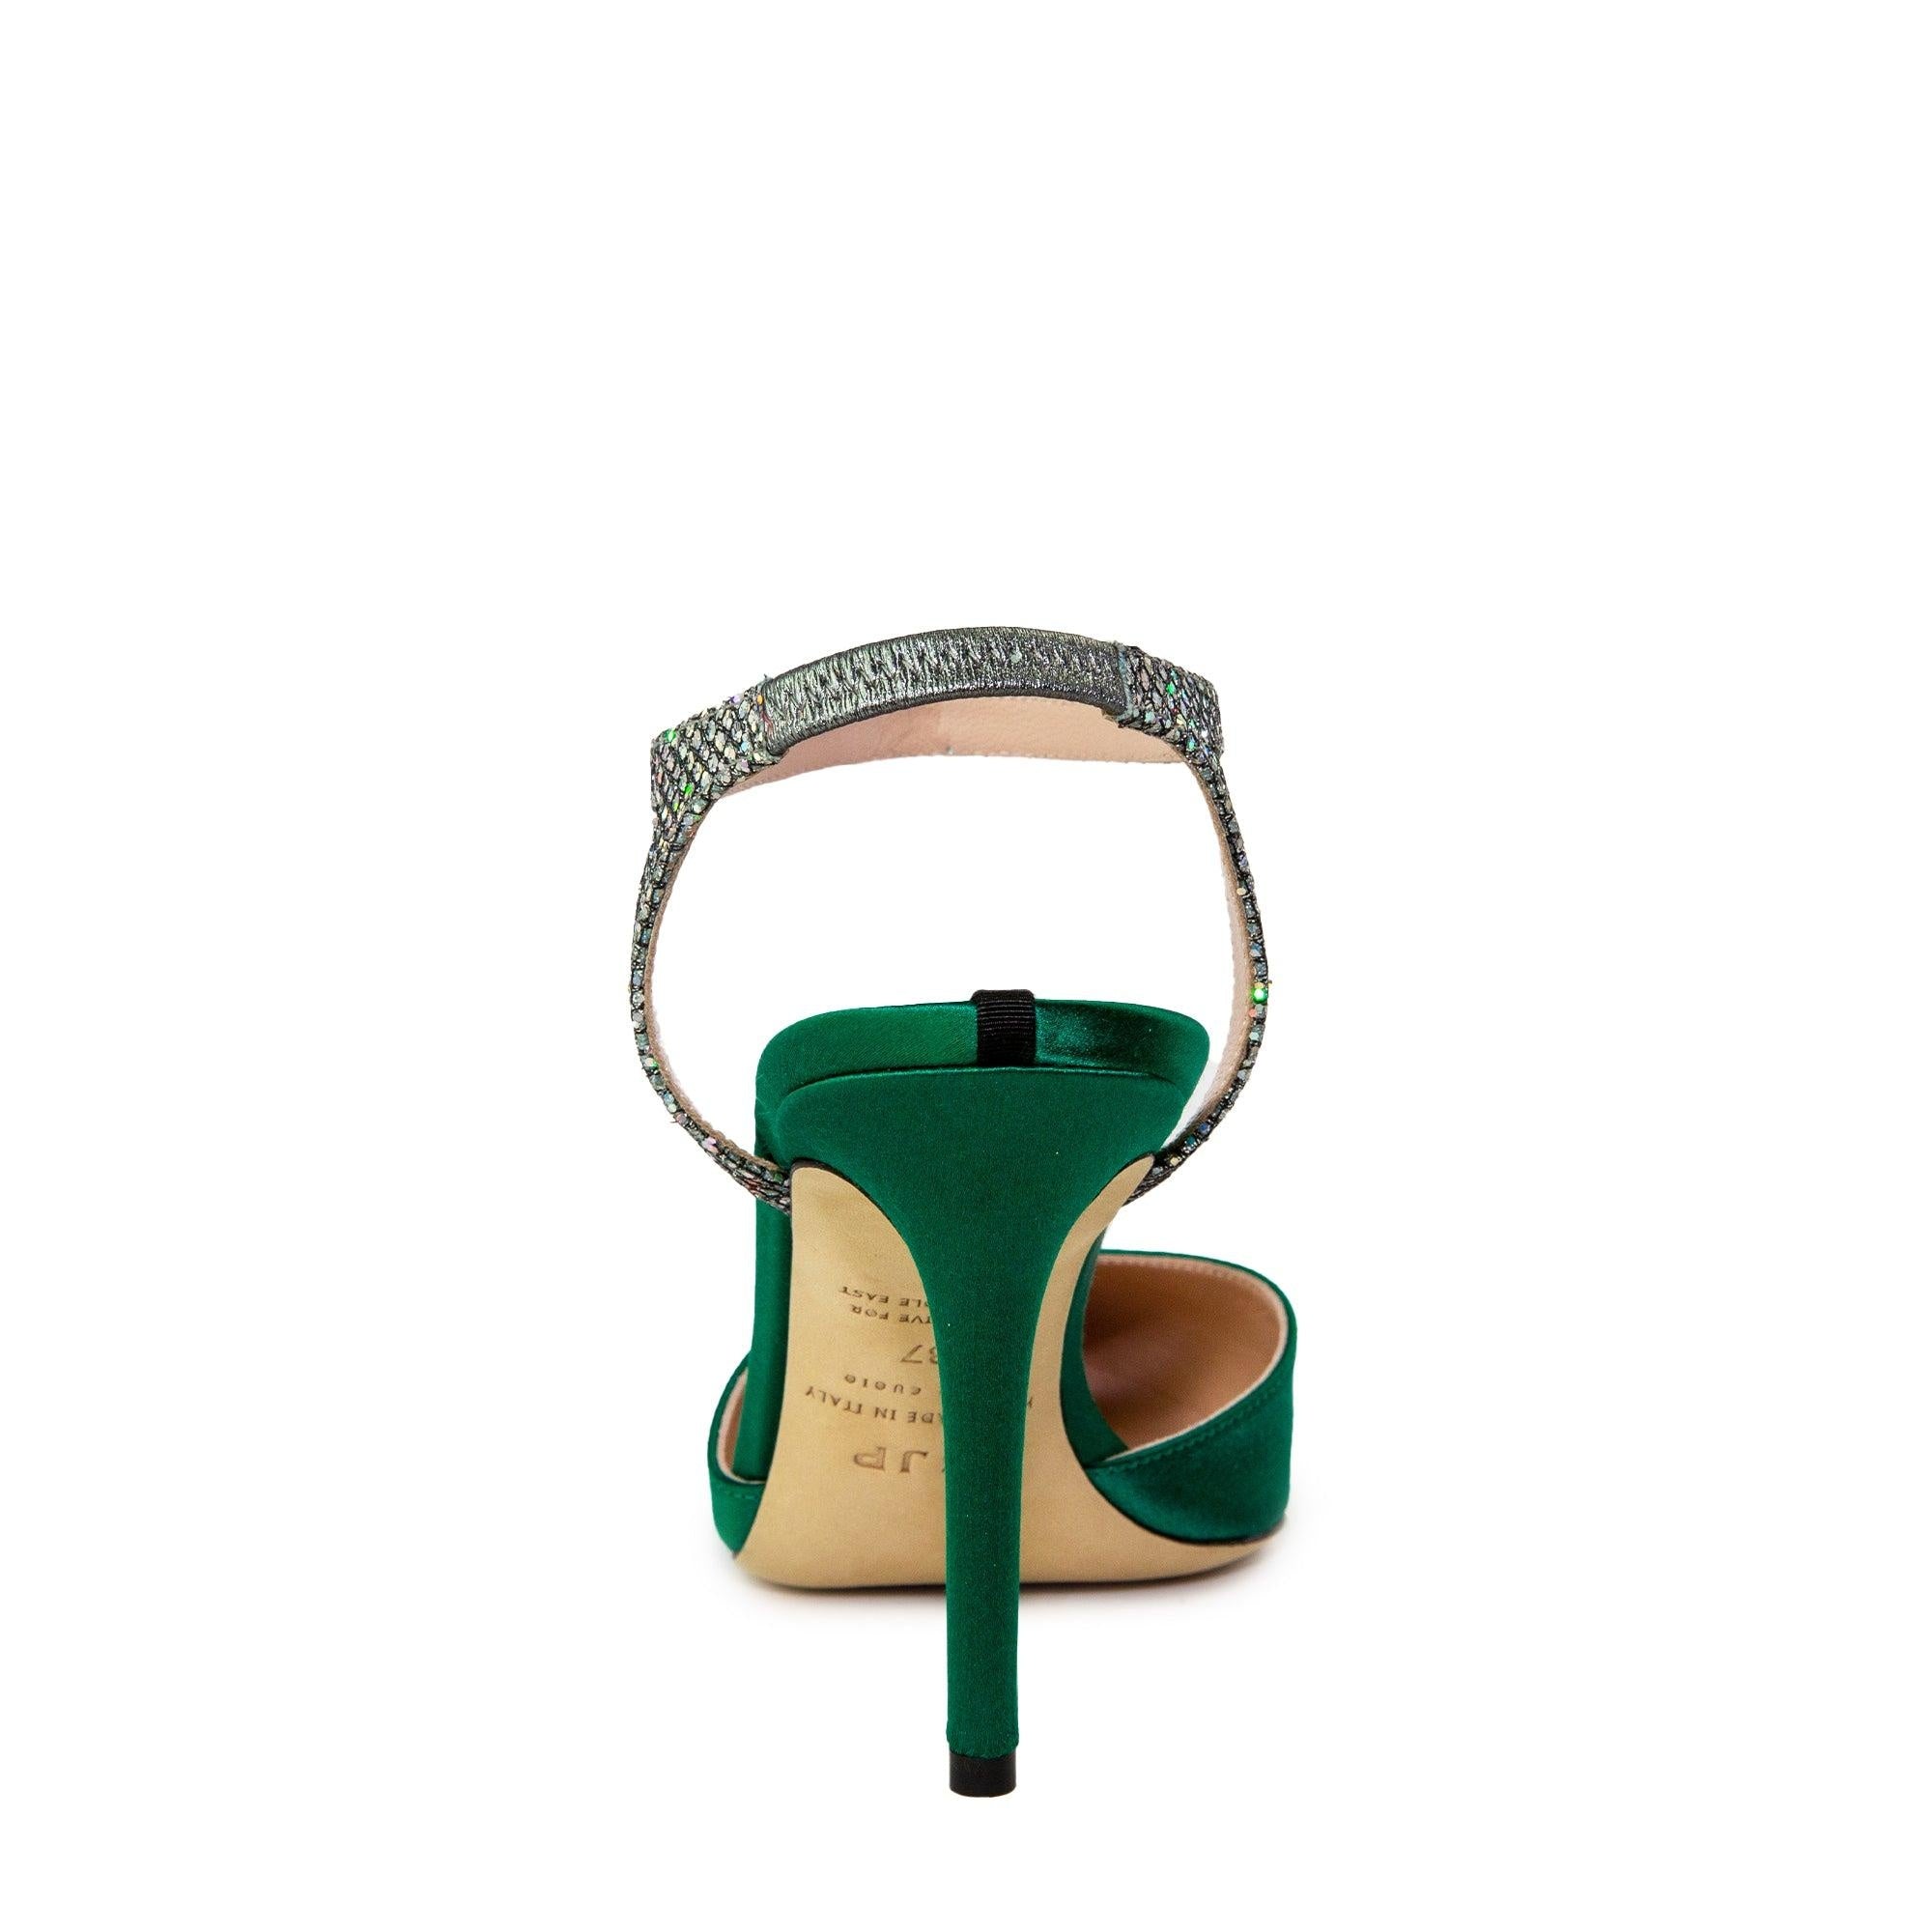 Single Emerald Green Satin Sandals 90mm - InstaRunway.com